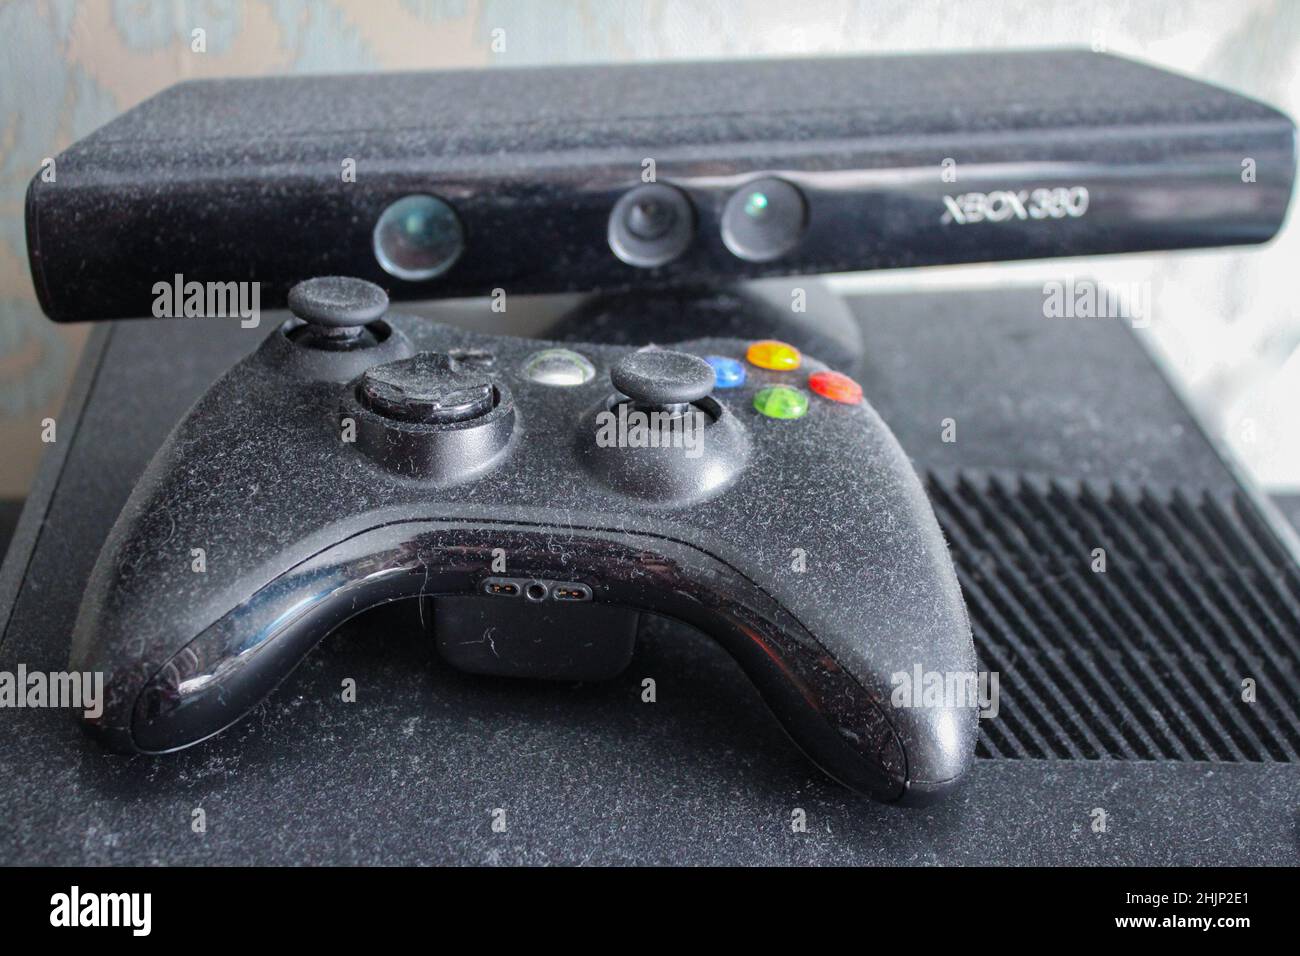 Xbox kinect sensor hi-res stock photography and images - Alamy